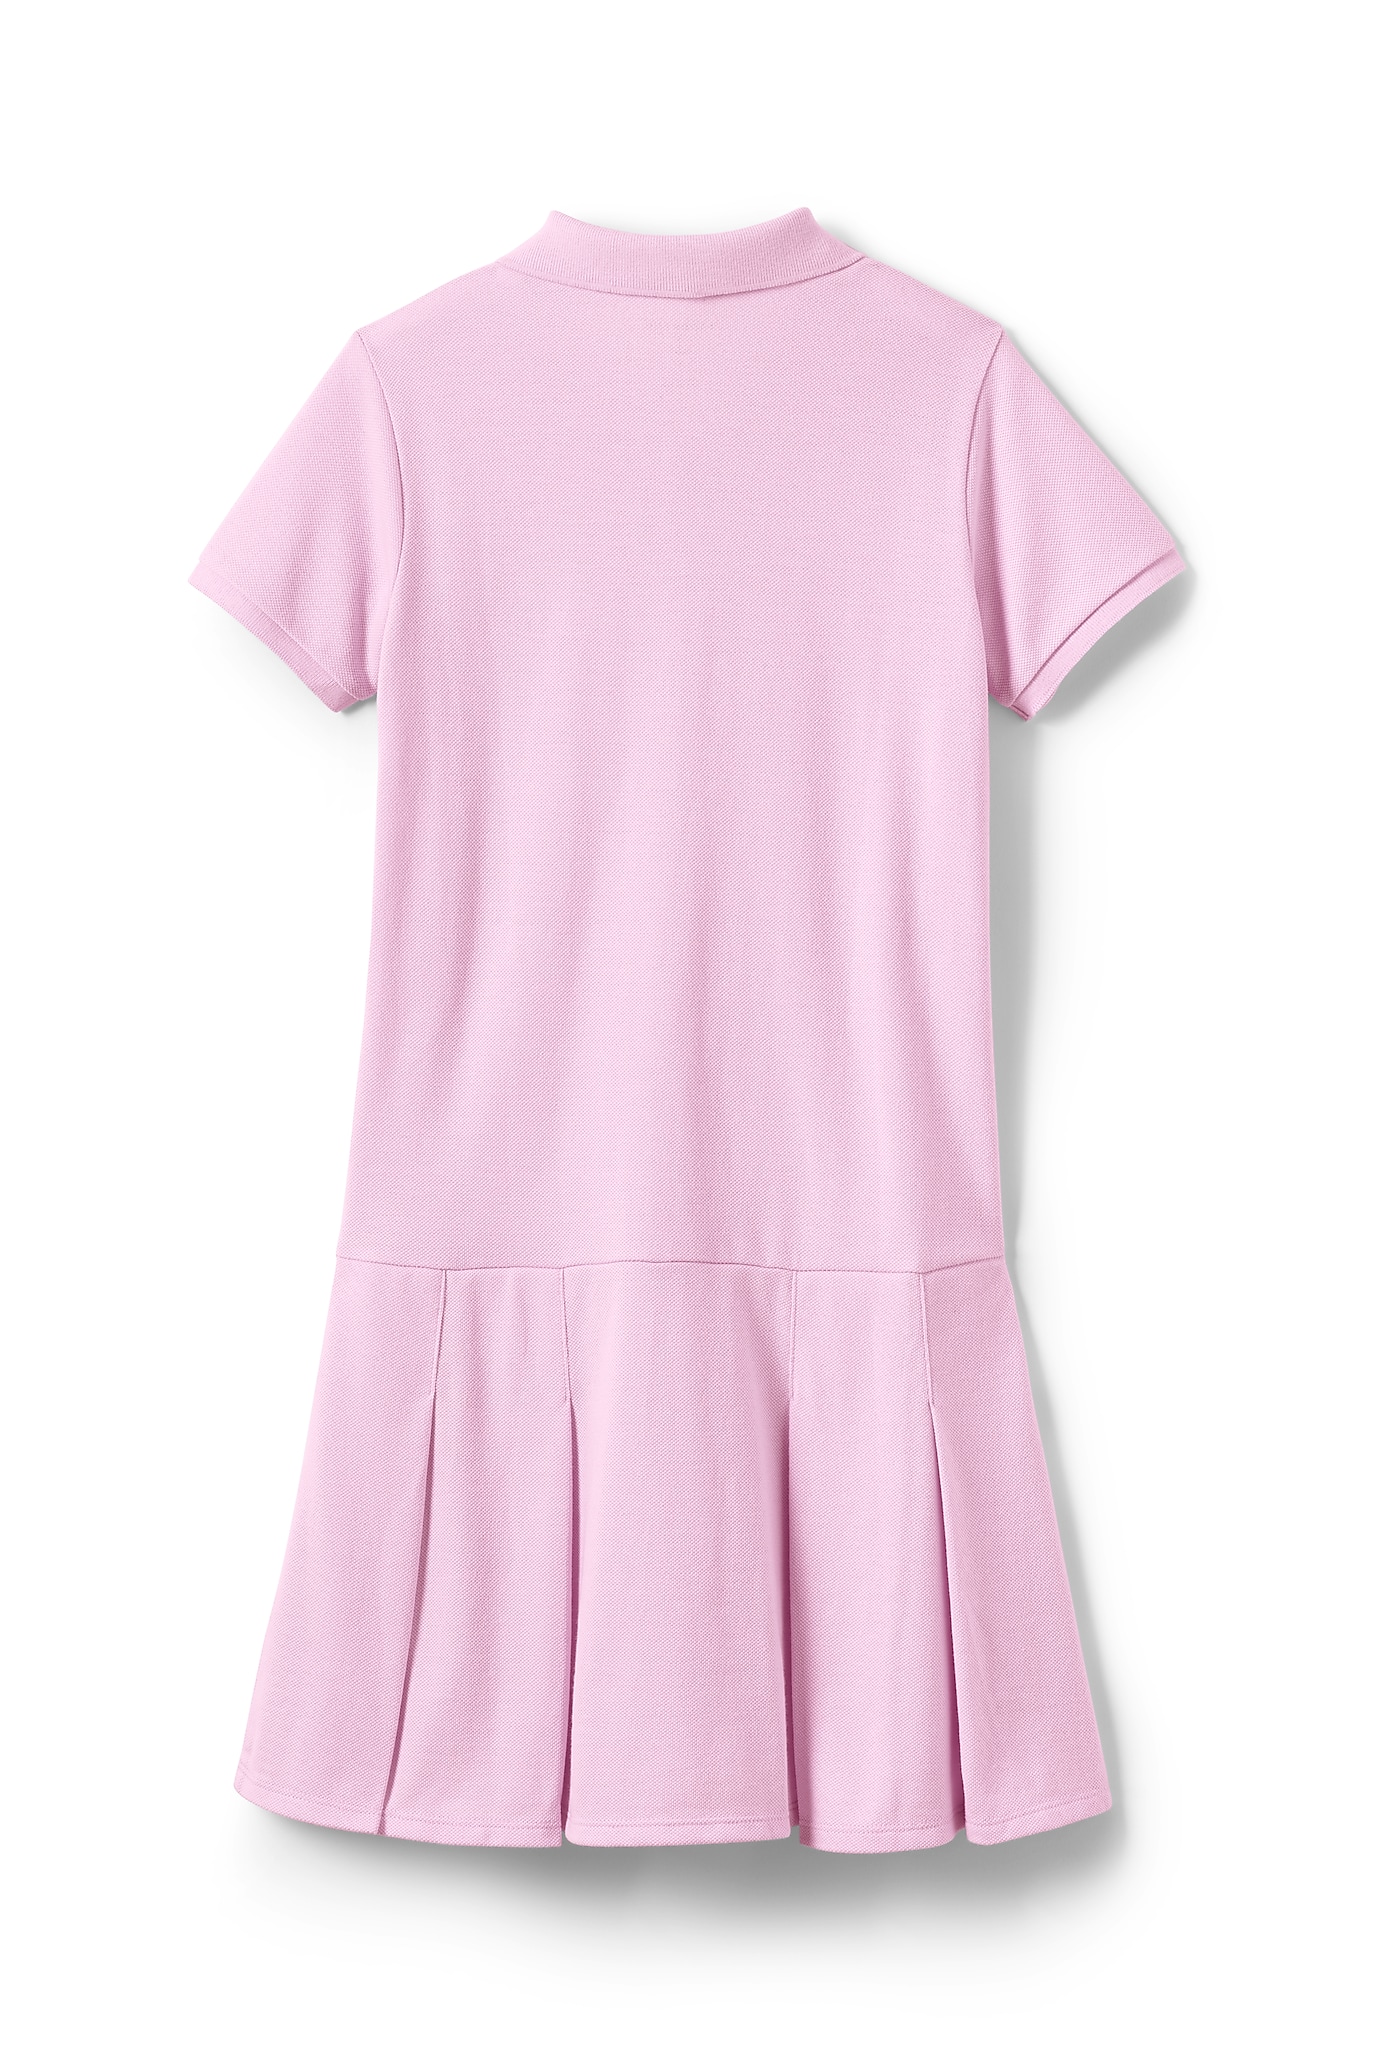 Lands' End Girls School Uniform Short Sleeve Mesh Polo Dress (Little Girls & Big Girls) - image 2 of 2